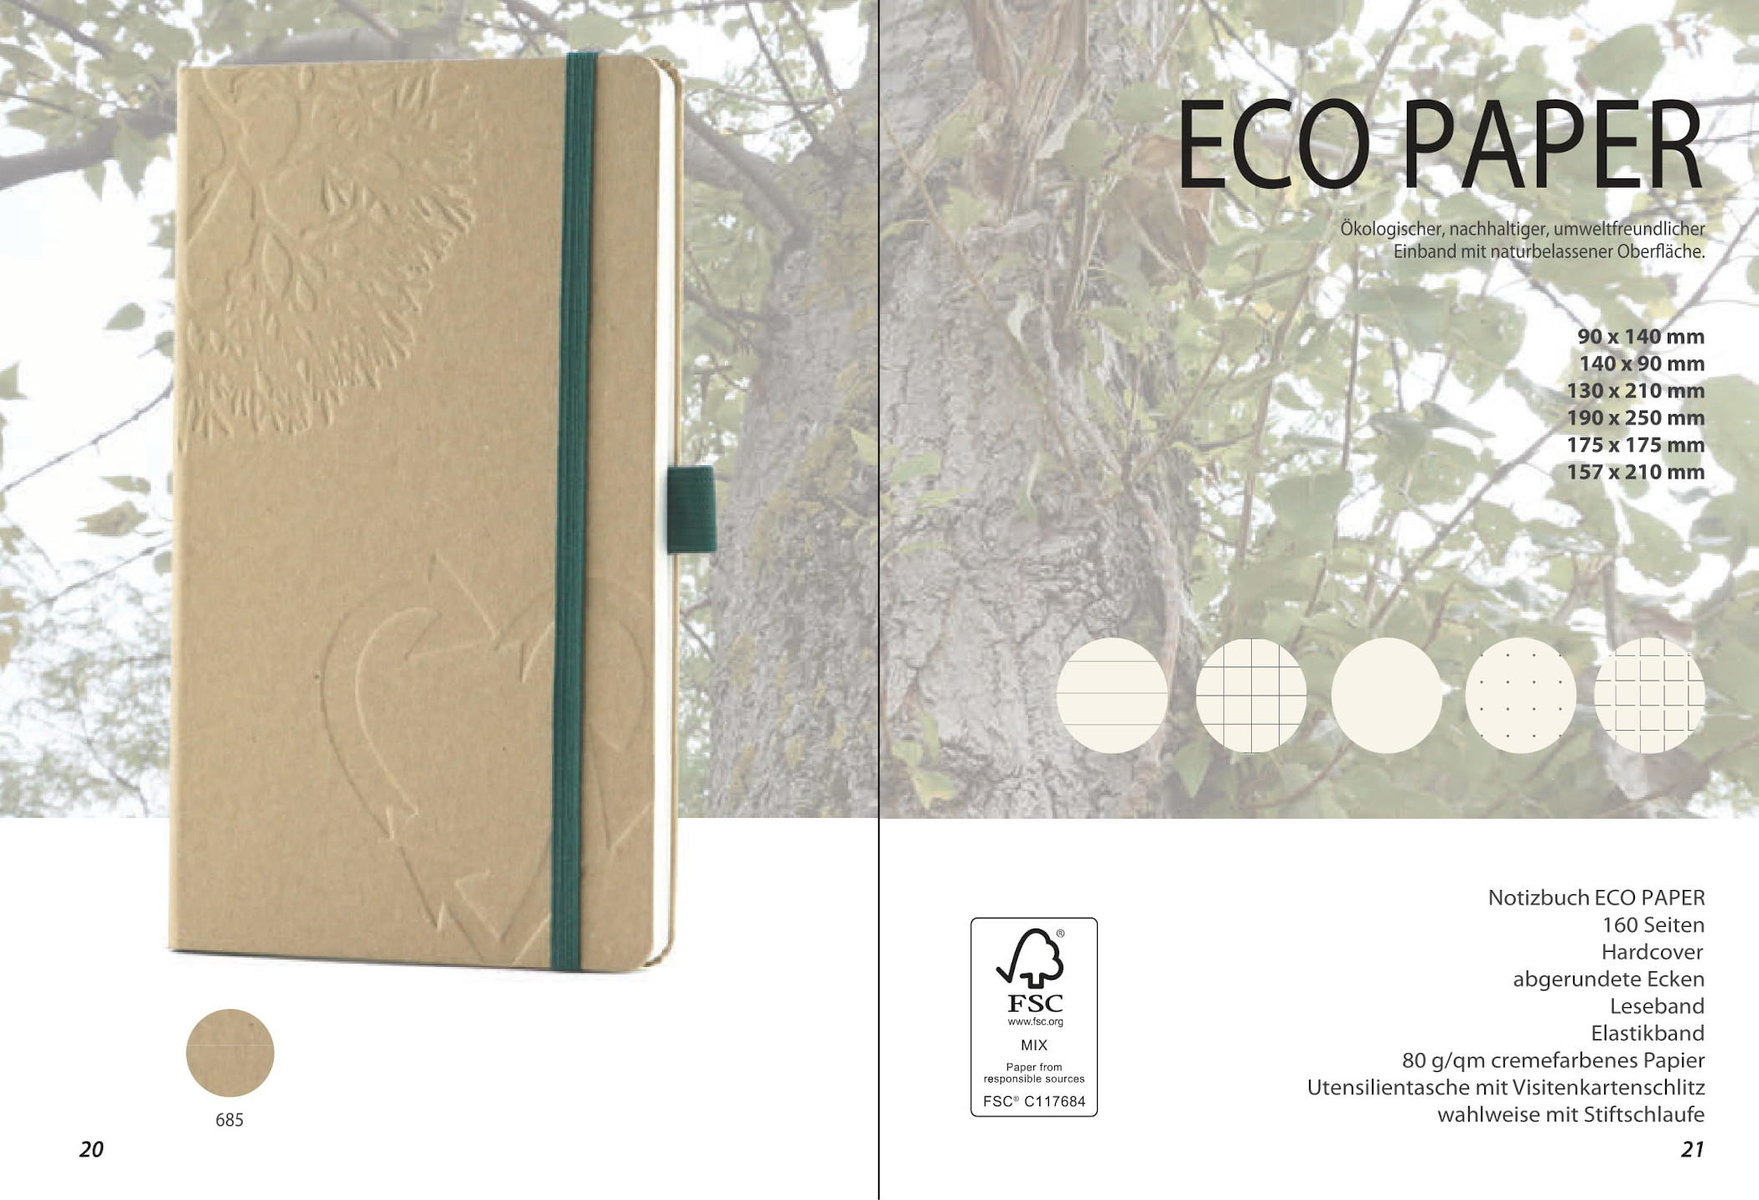 Notizbuch „Eco Paper“ von MinT Products